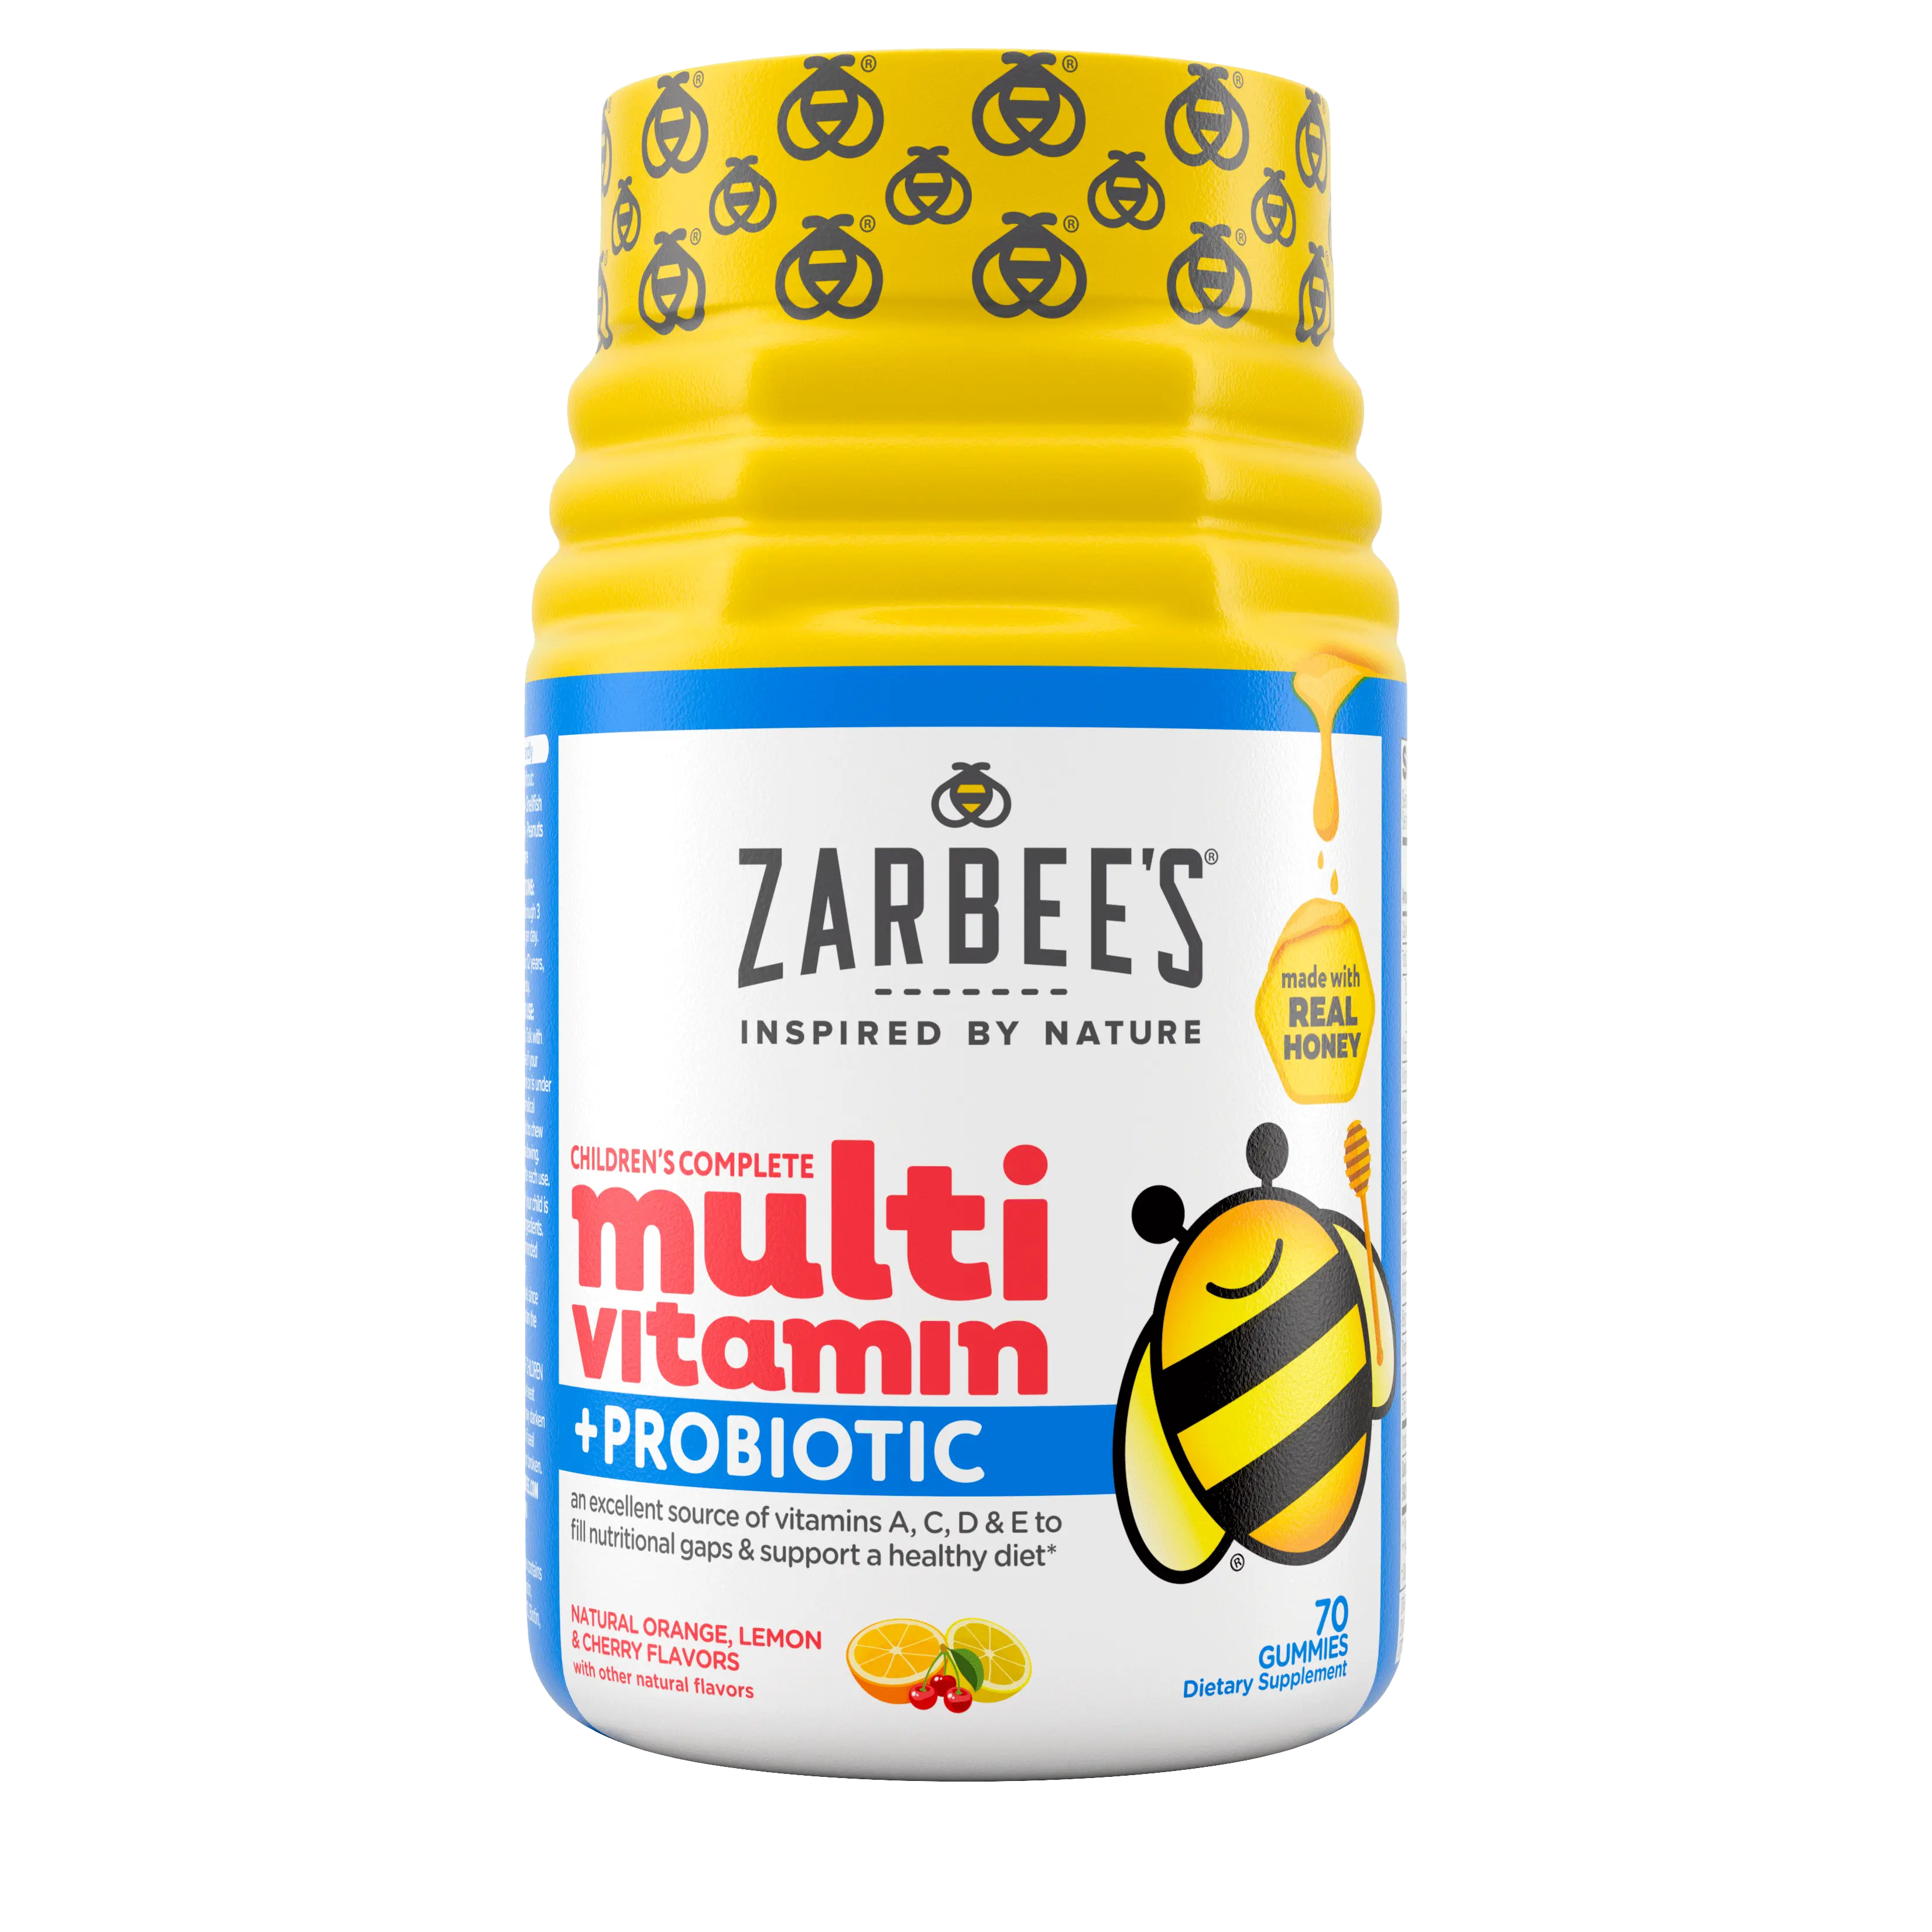 Front packaging of Zarbee’s® Children’s Complete Multivitamin + Probiotic in natural fruit flavor